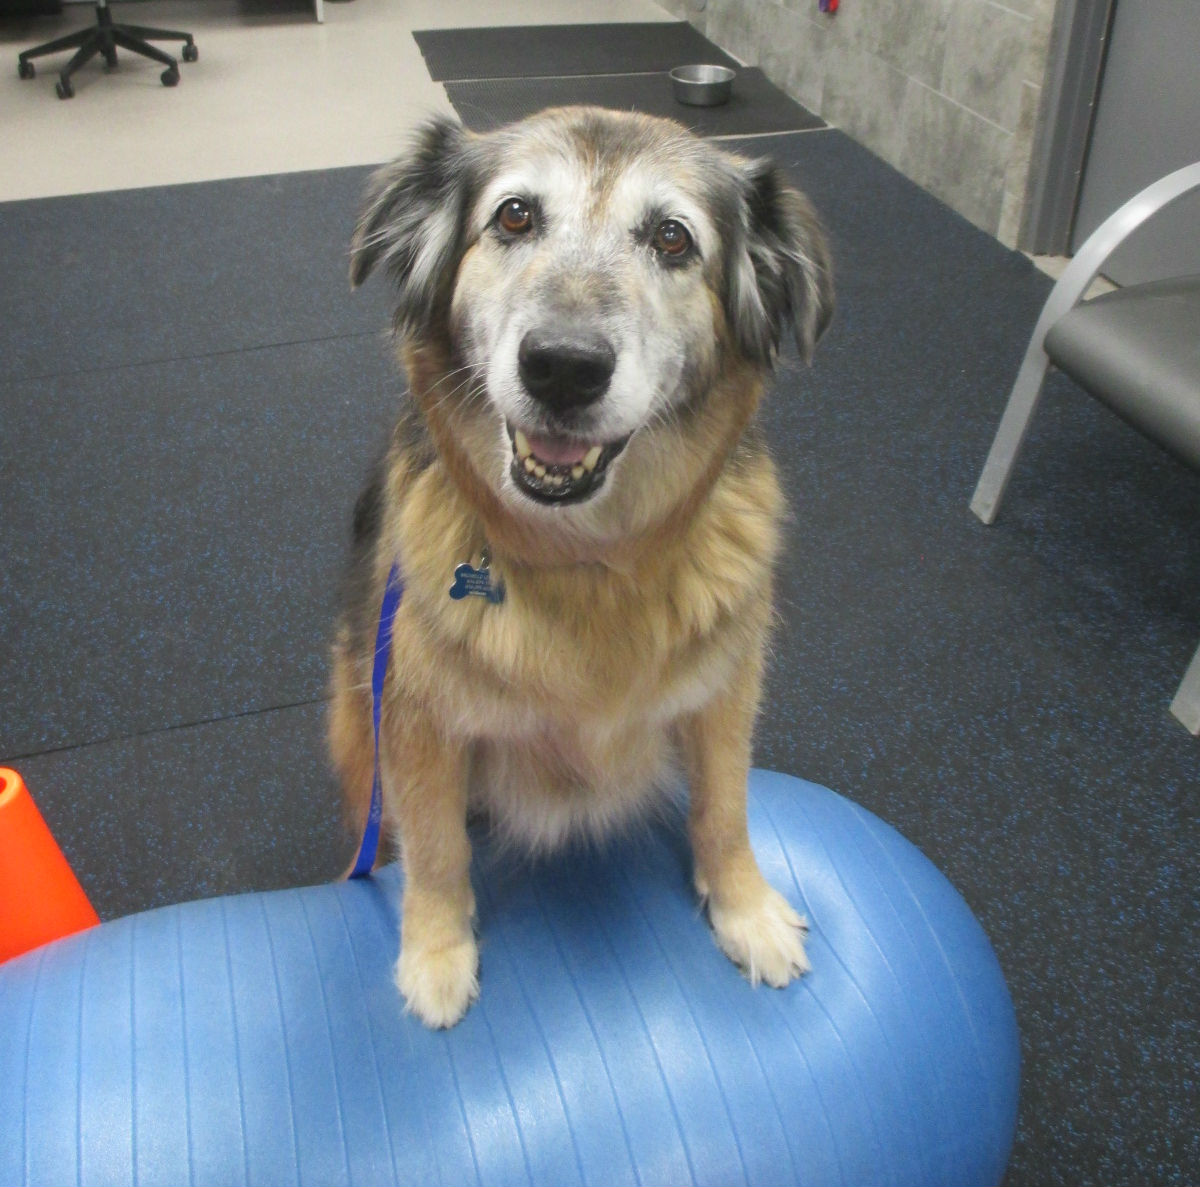 CHFA's rehab gives senior dogs a new "leash" on life